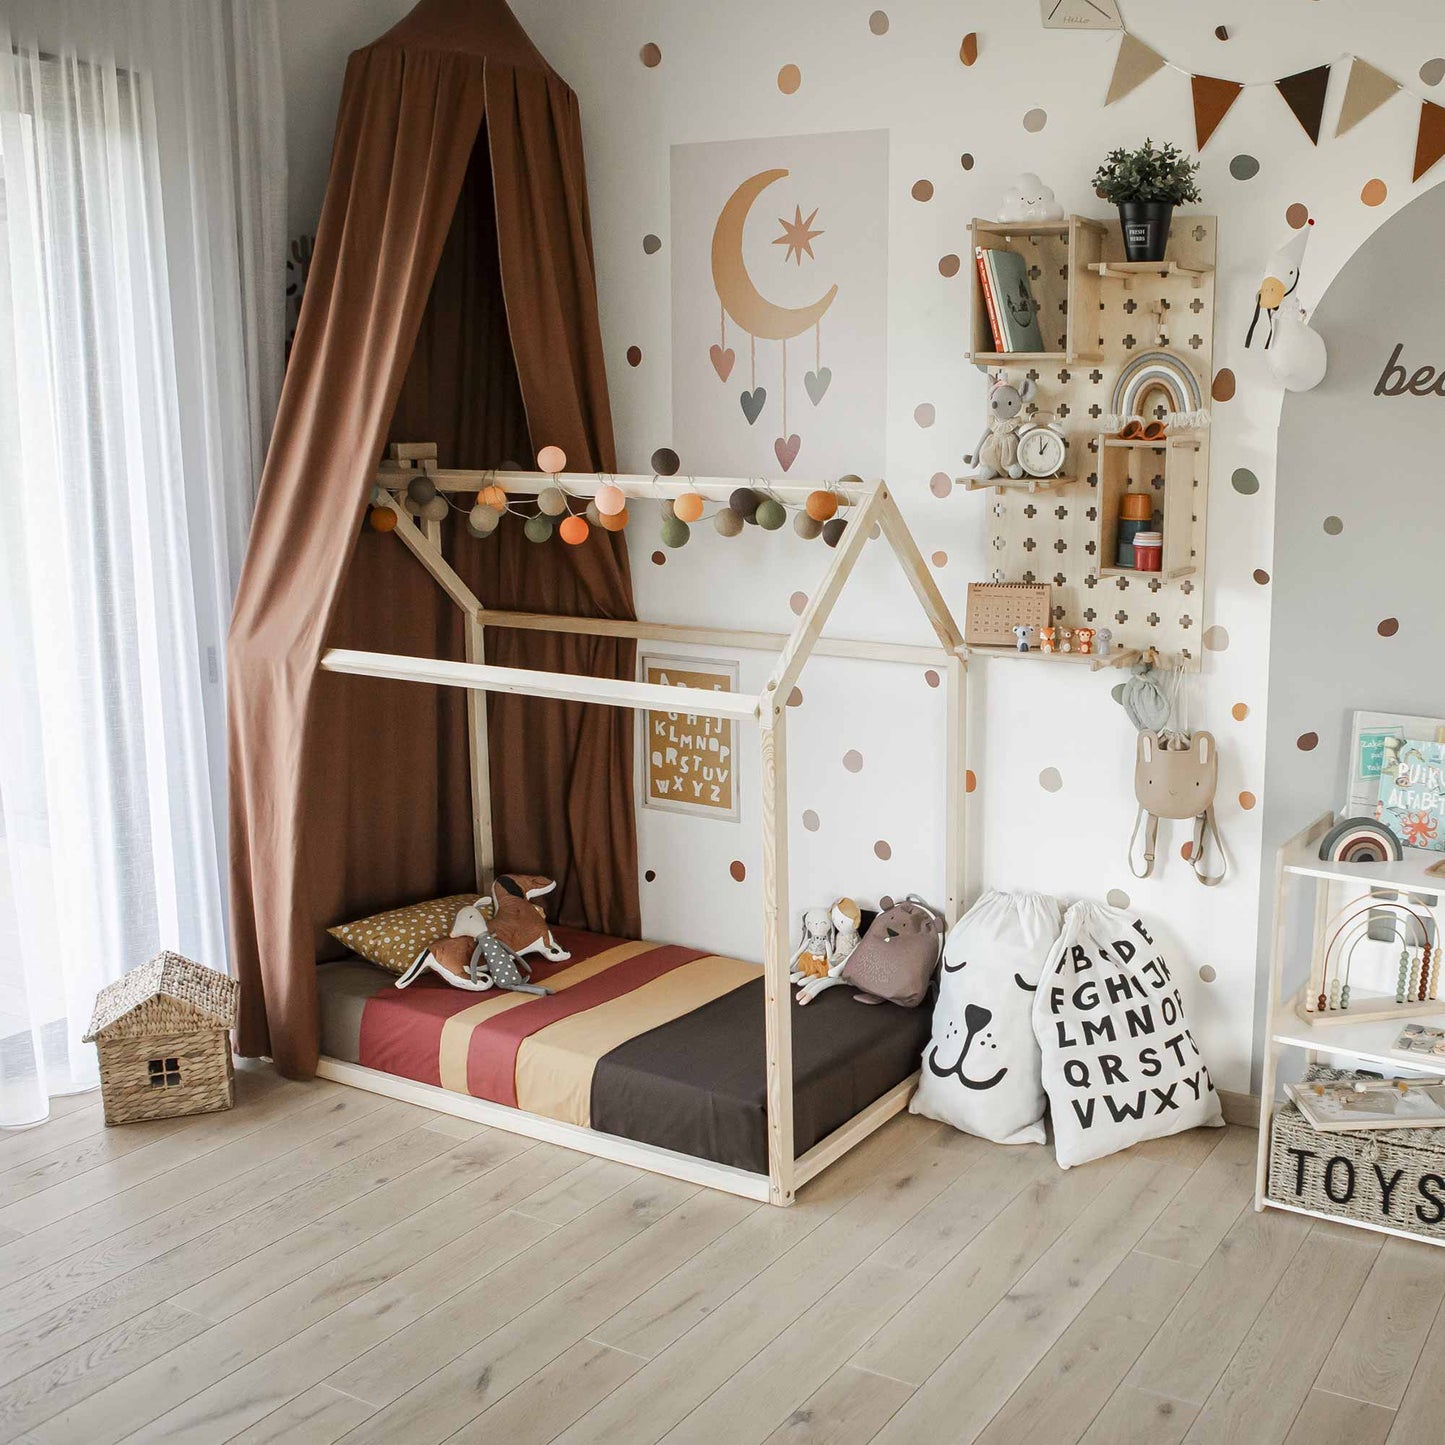 Montessoritoddler floor house bed frame in a girlroom